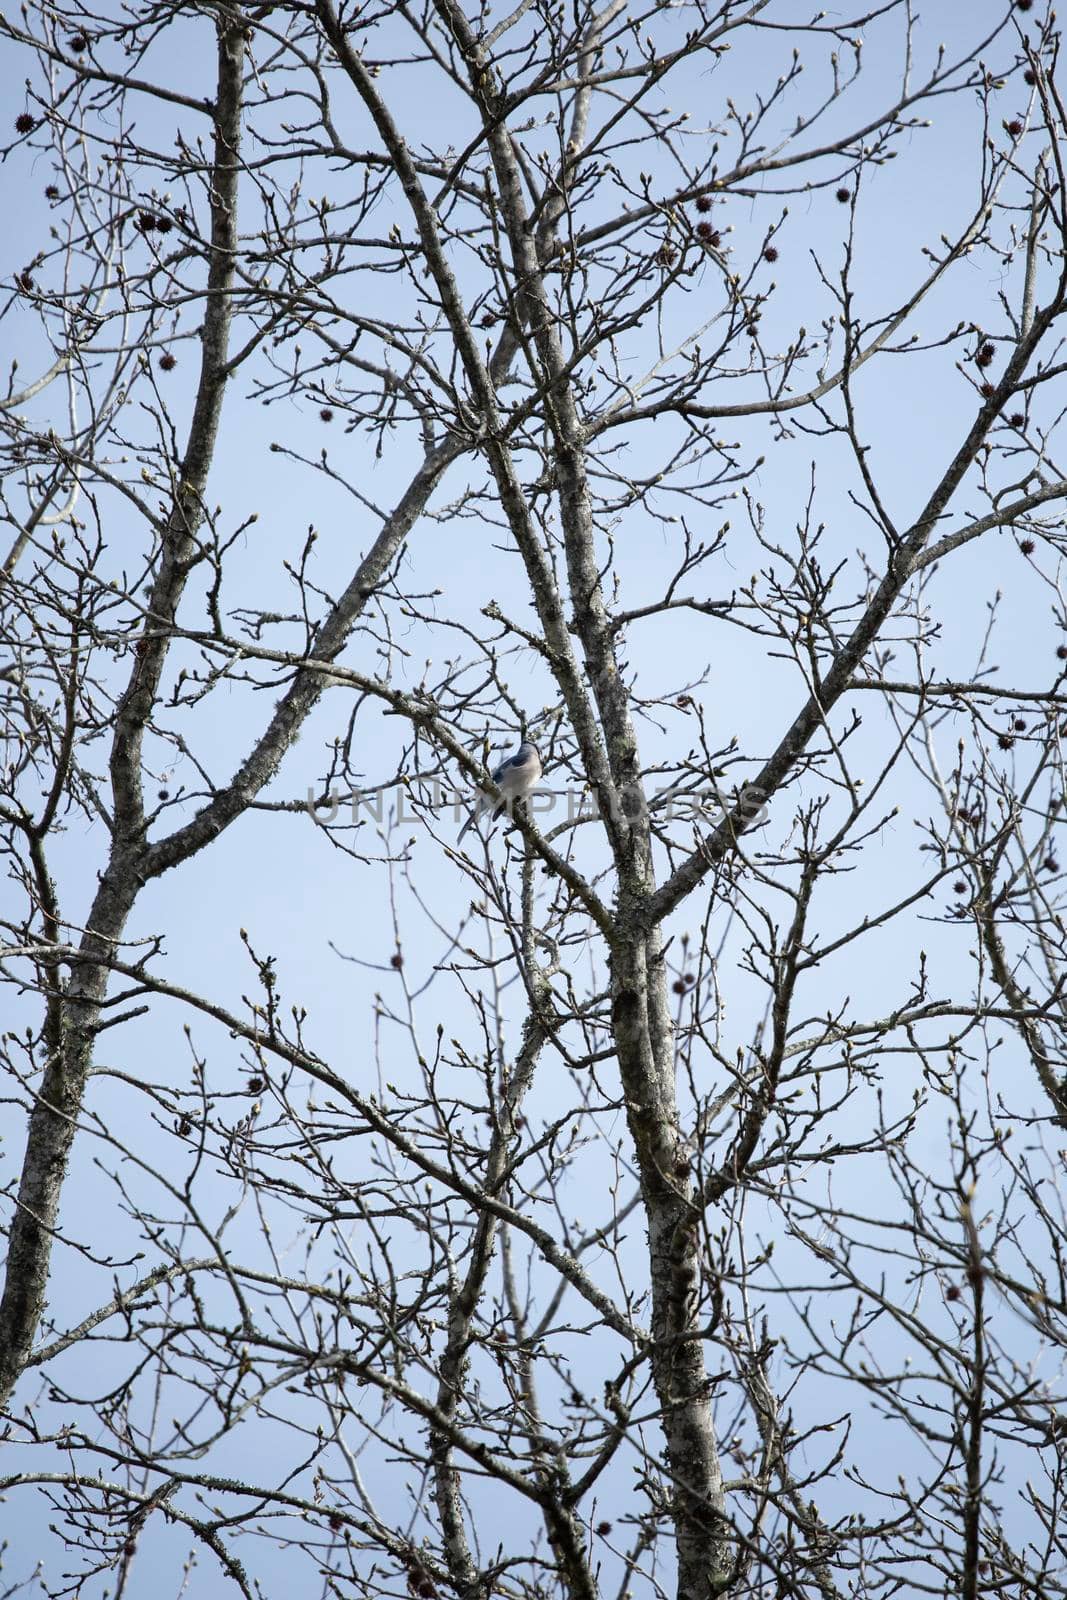 Blue Jay on a Branch by tornado98